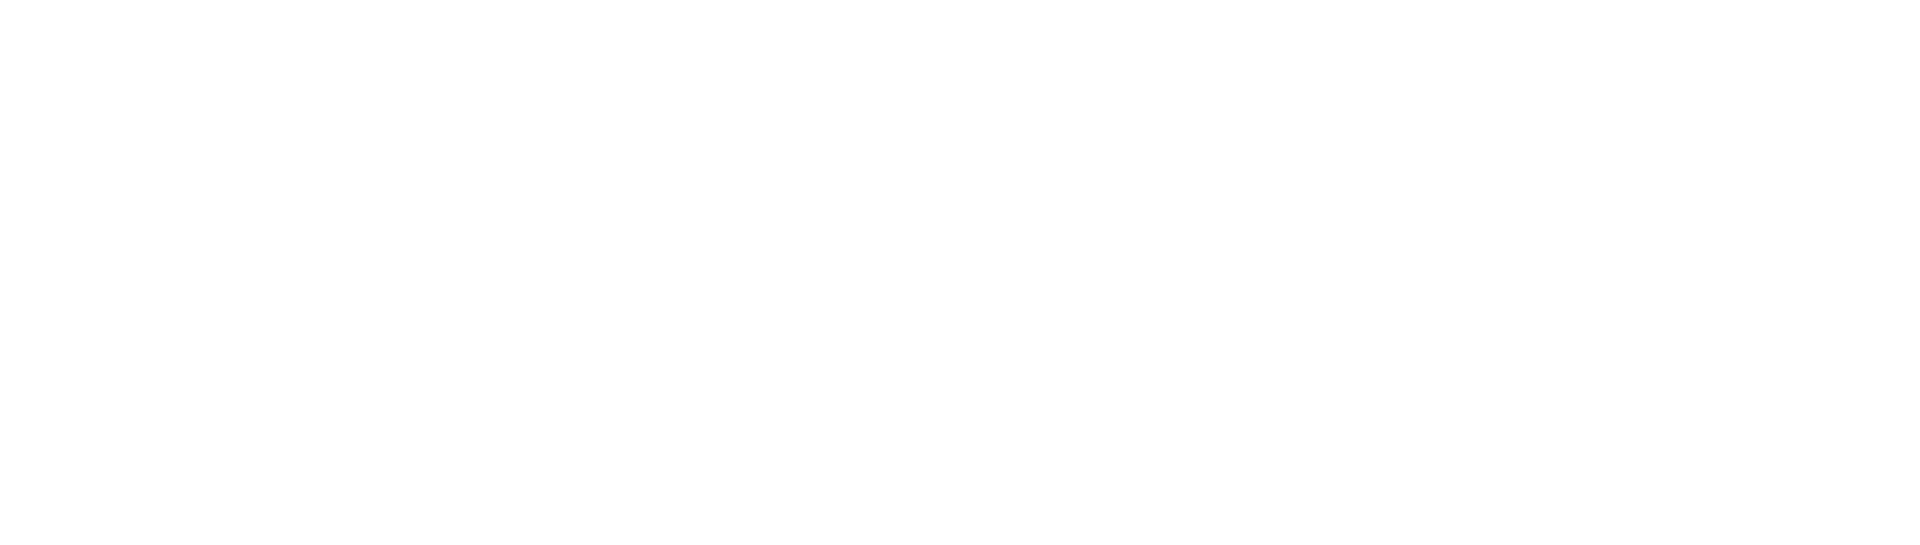 Iowa Speech Language Hearing Foundation